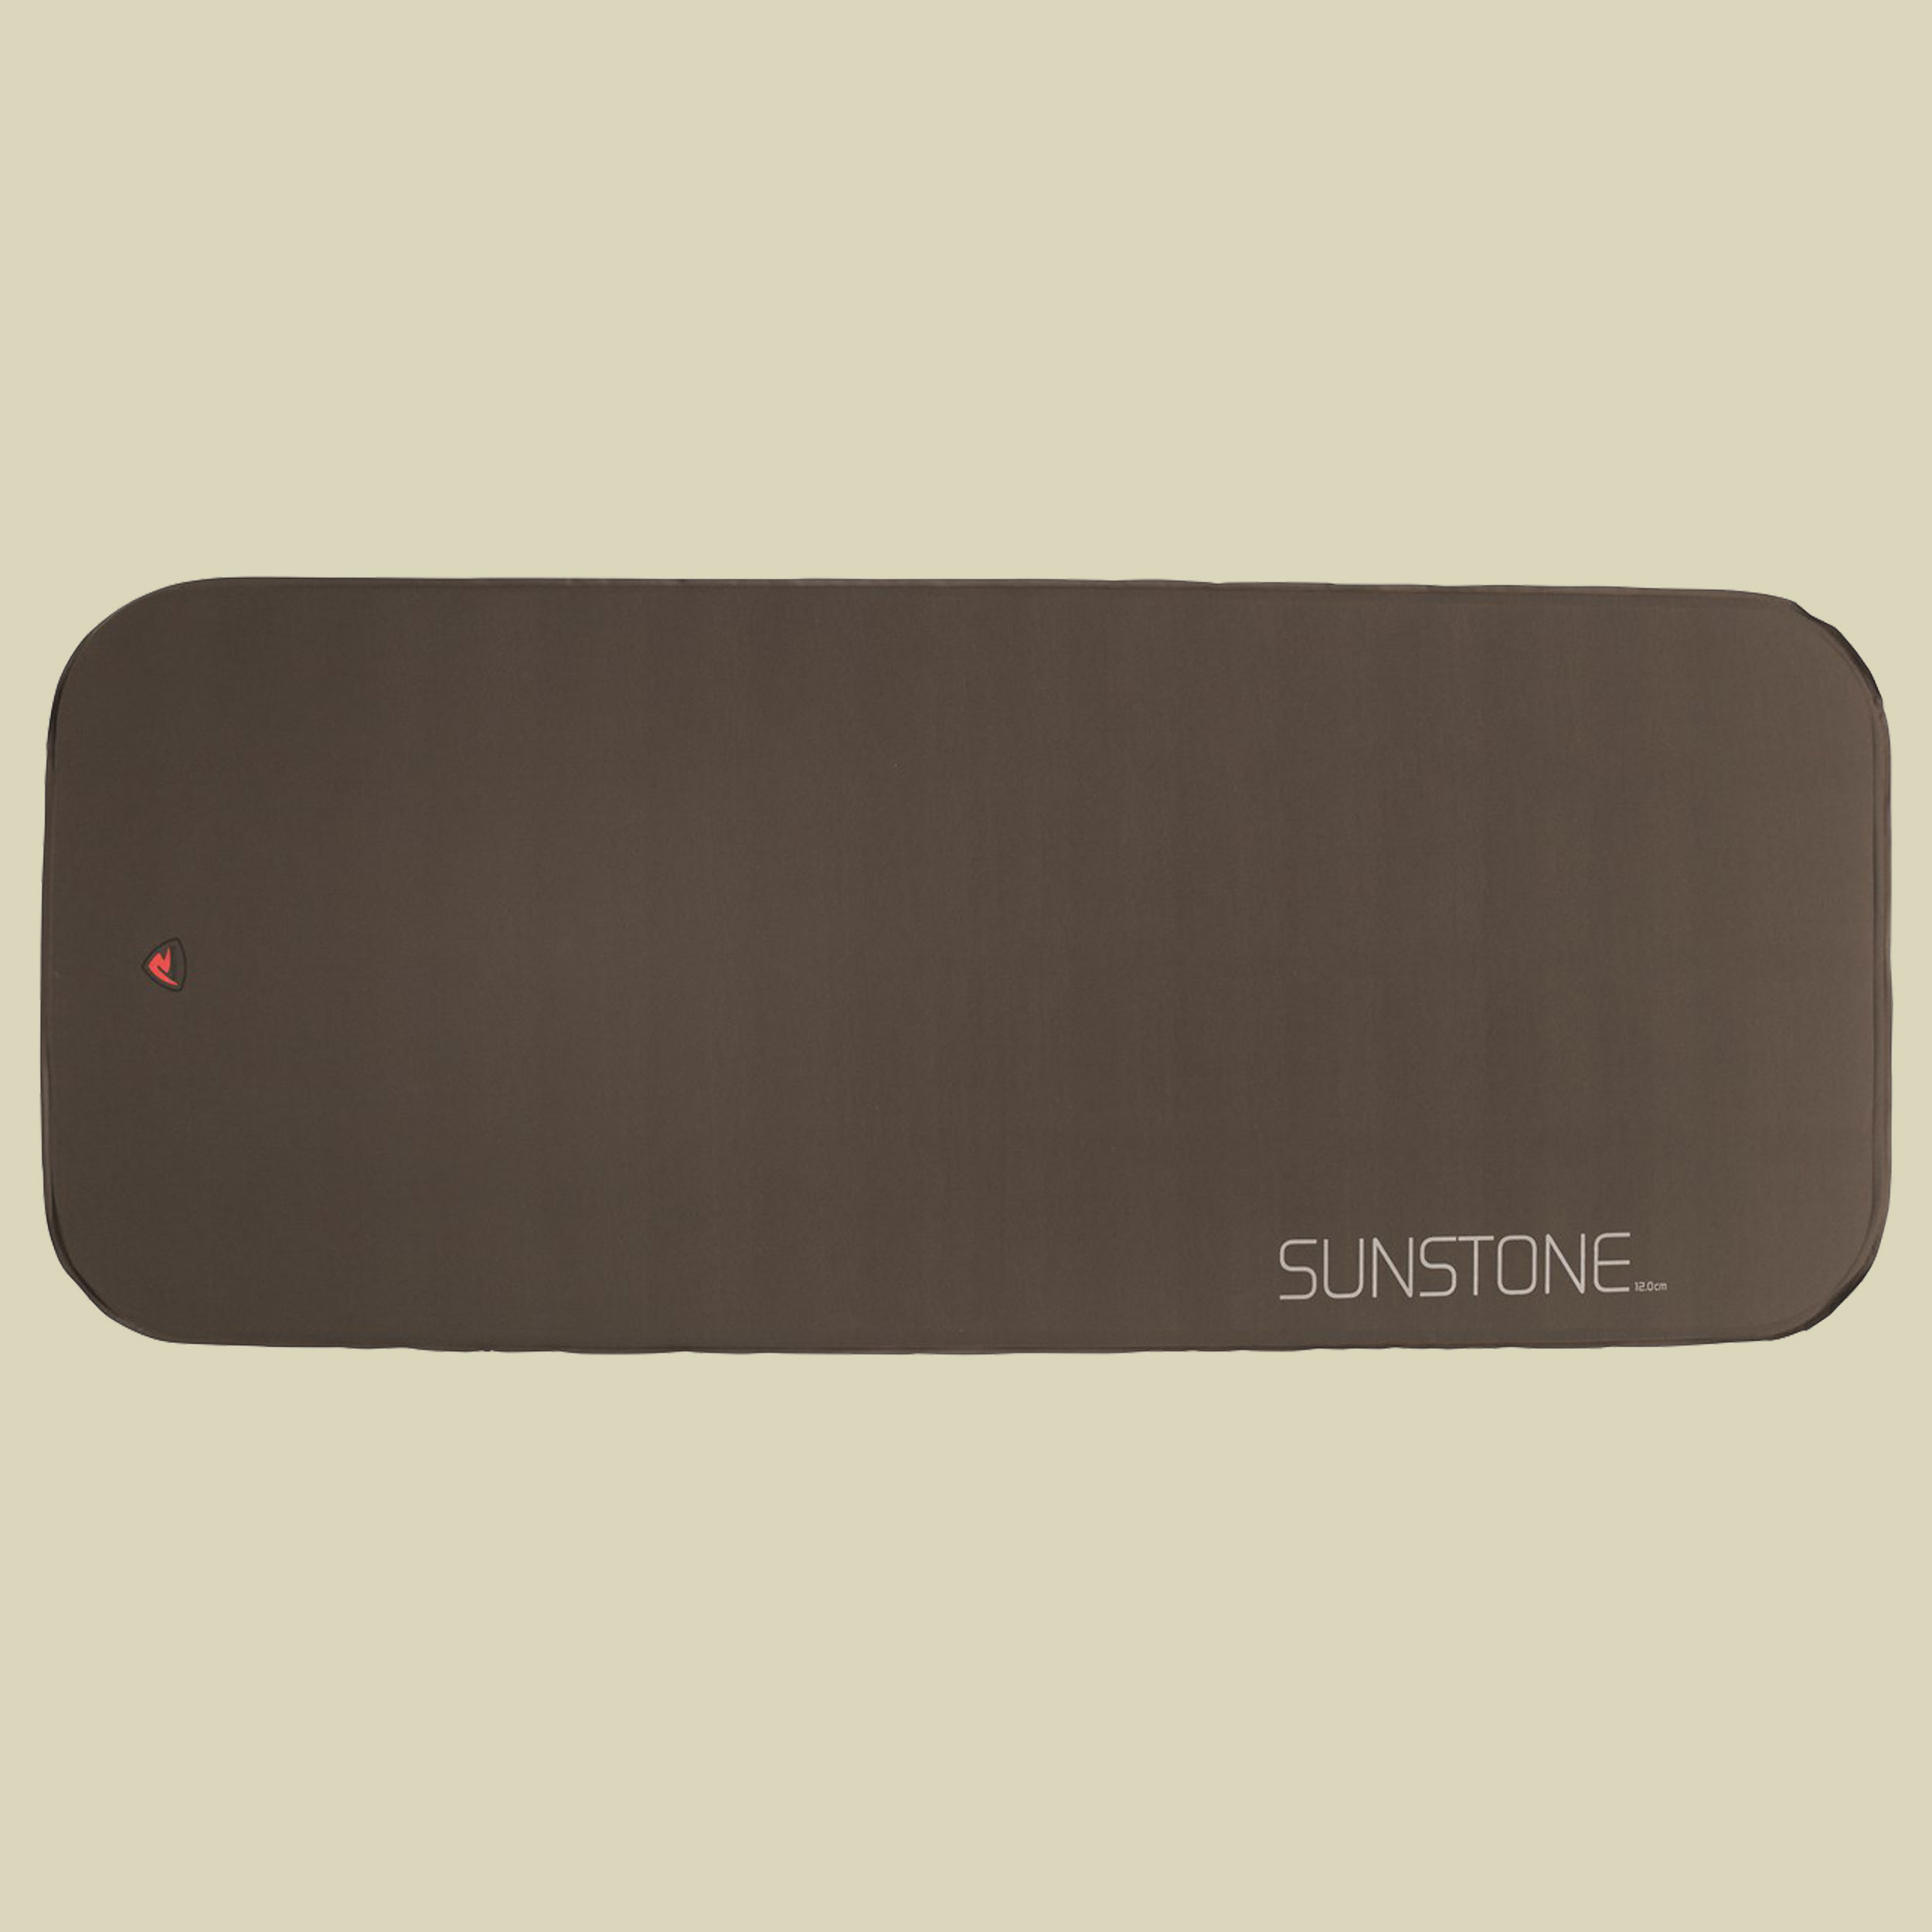 Sunstone 120 Maße: 200 x 77 x 12 cm Farbe: brown